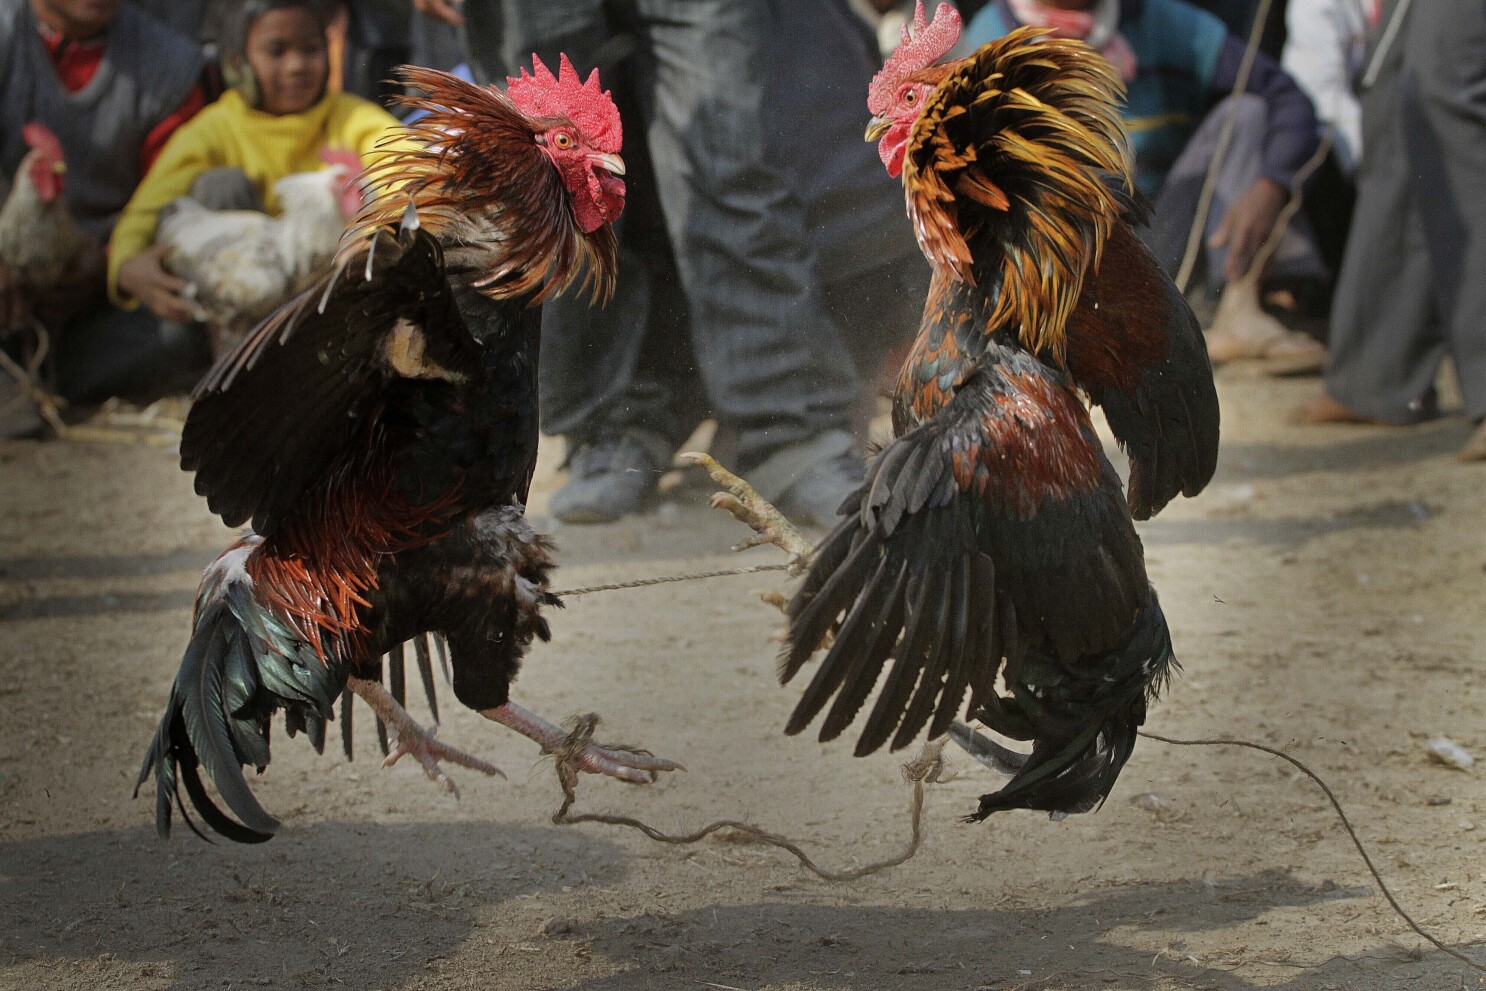 Mata gallo a dueño durante pelea de gallos ilegal en India - Los Angeles Times